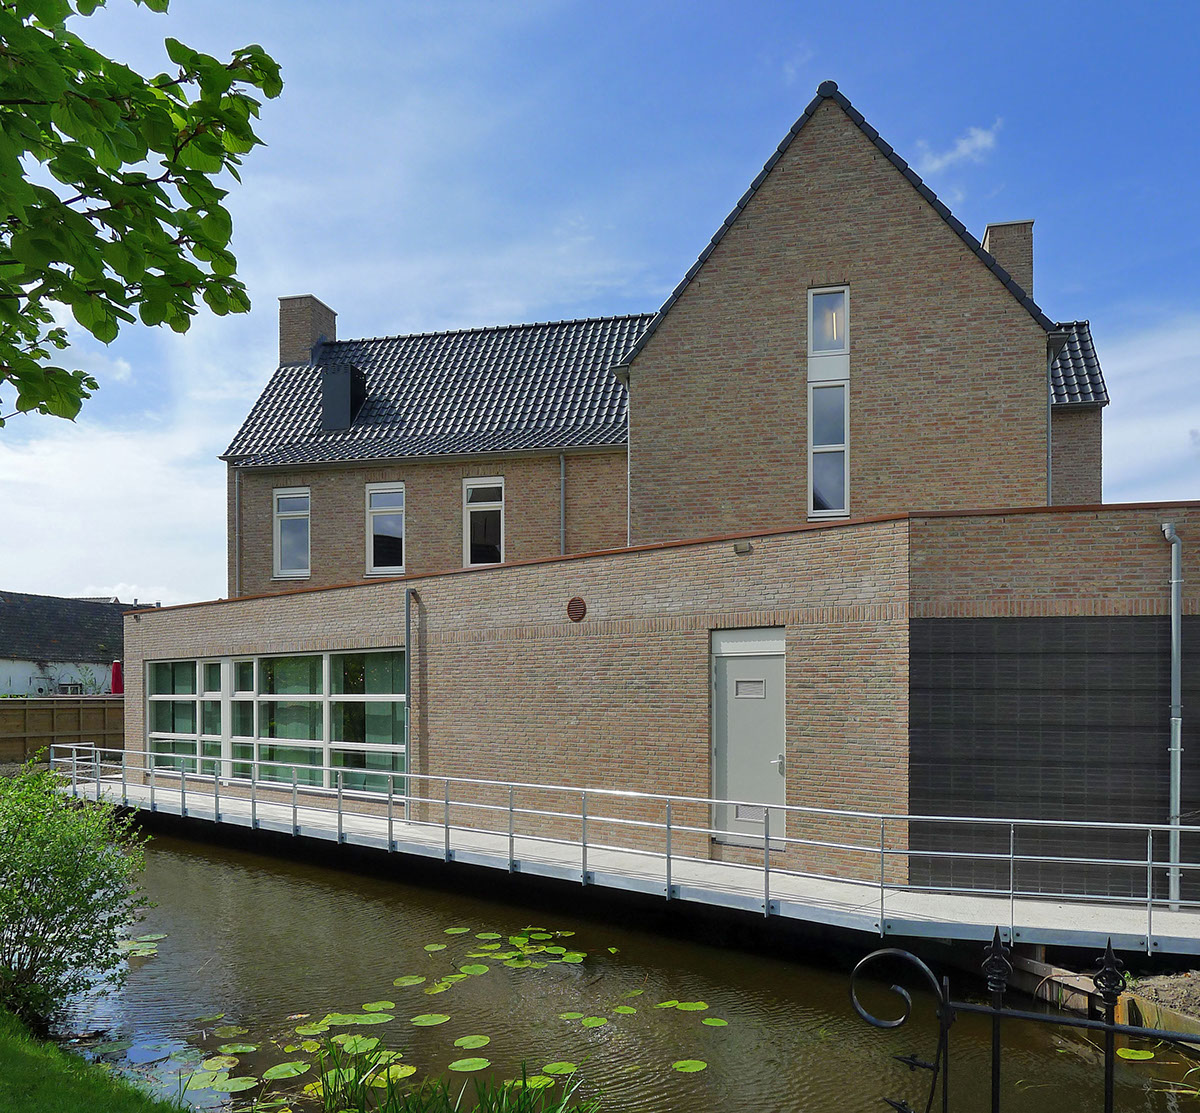 Klaas Vermaas community center Gemeenschapscentrum Kerkelijk centrum architect Nederland The Netherlands Reghthuysplein